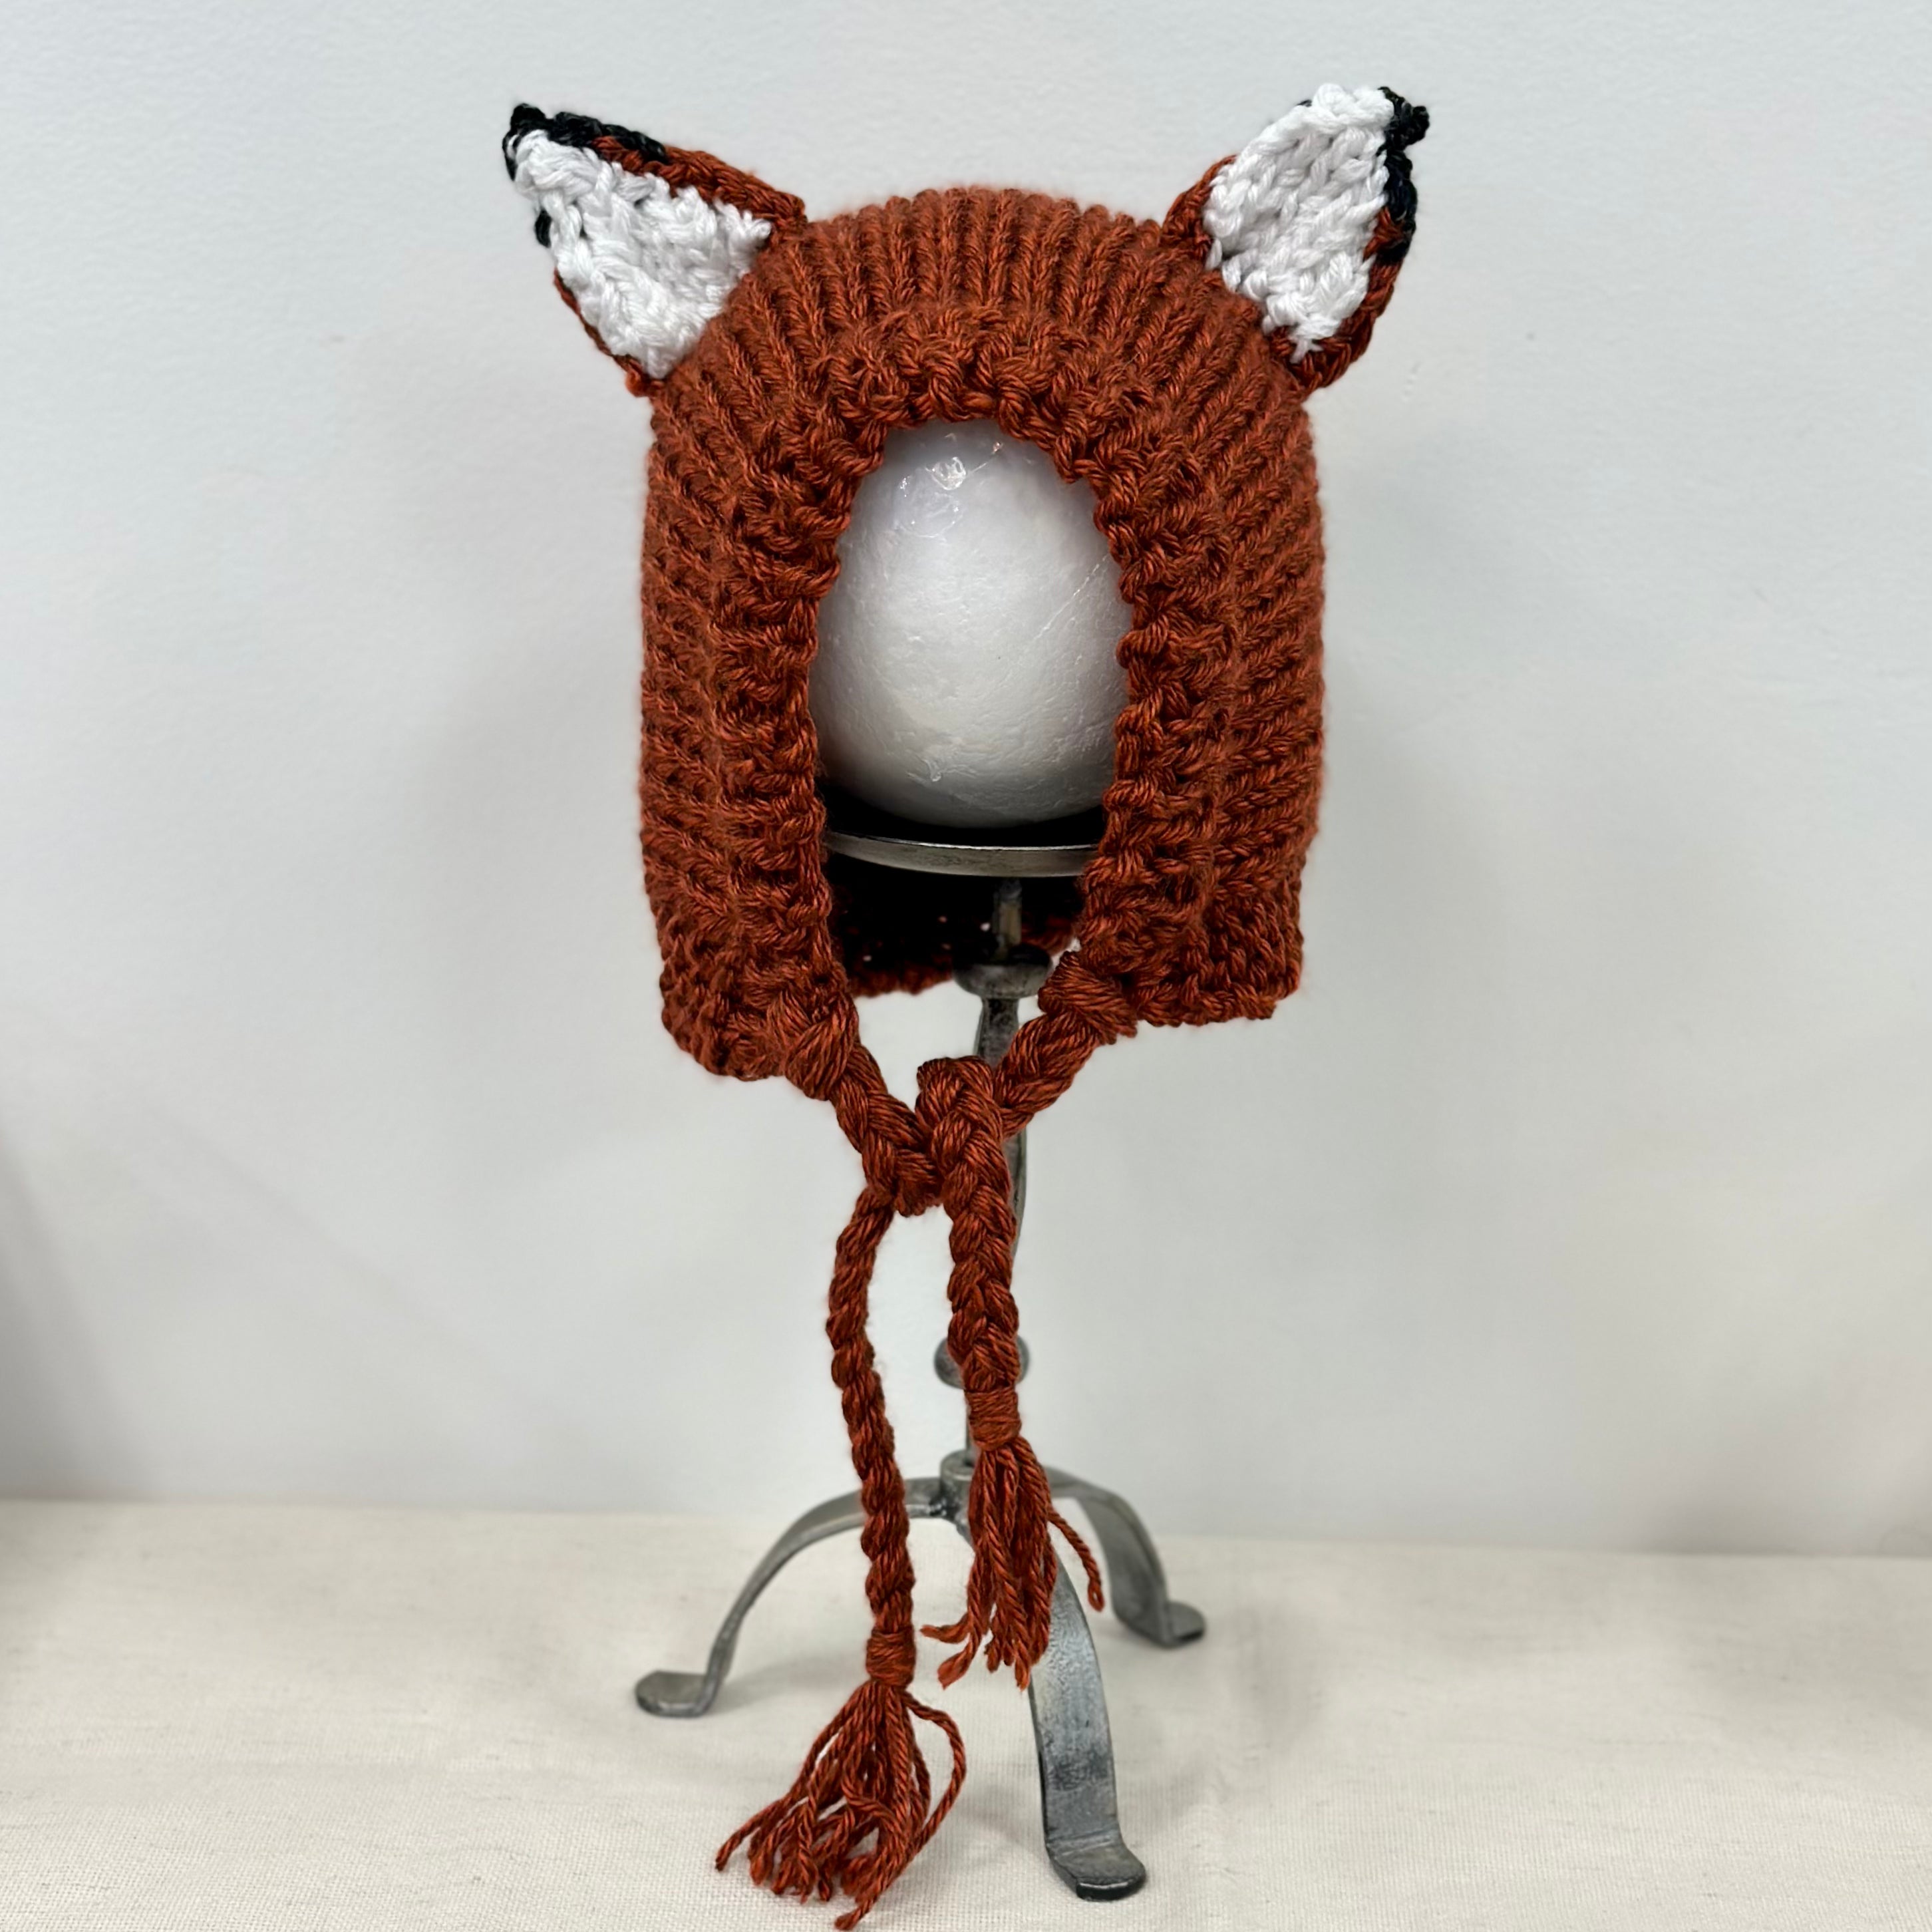 Knit Fox Bonnet